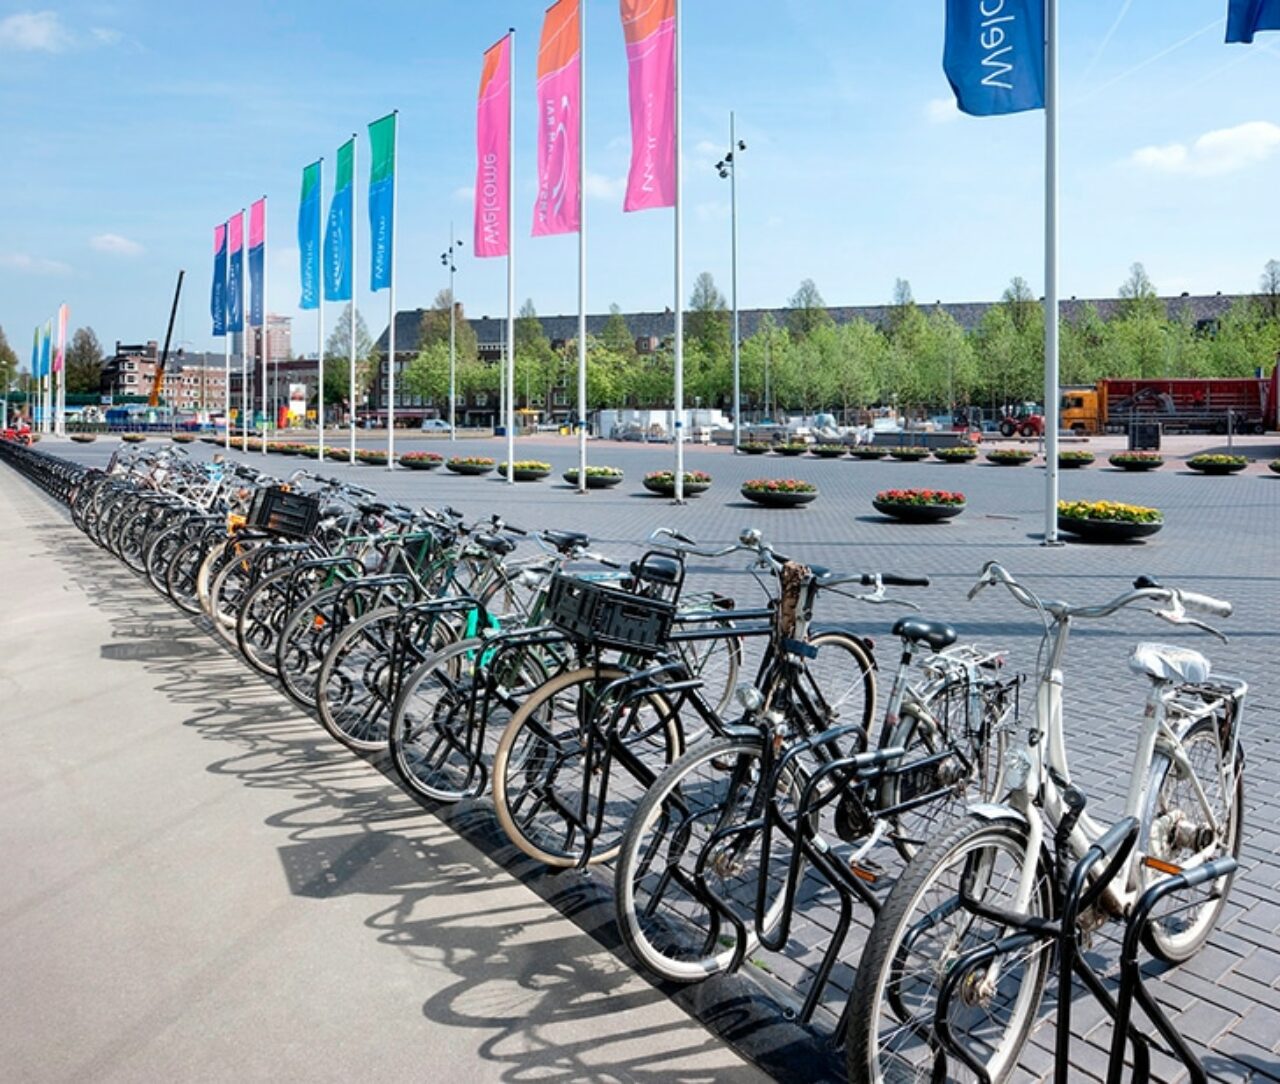 Range-vélo - Support Cobra - Rangée avec Vélos - Amsterdam Pays-Bas